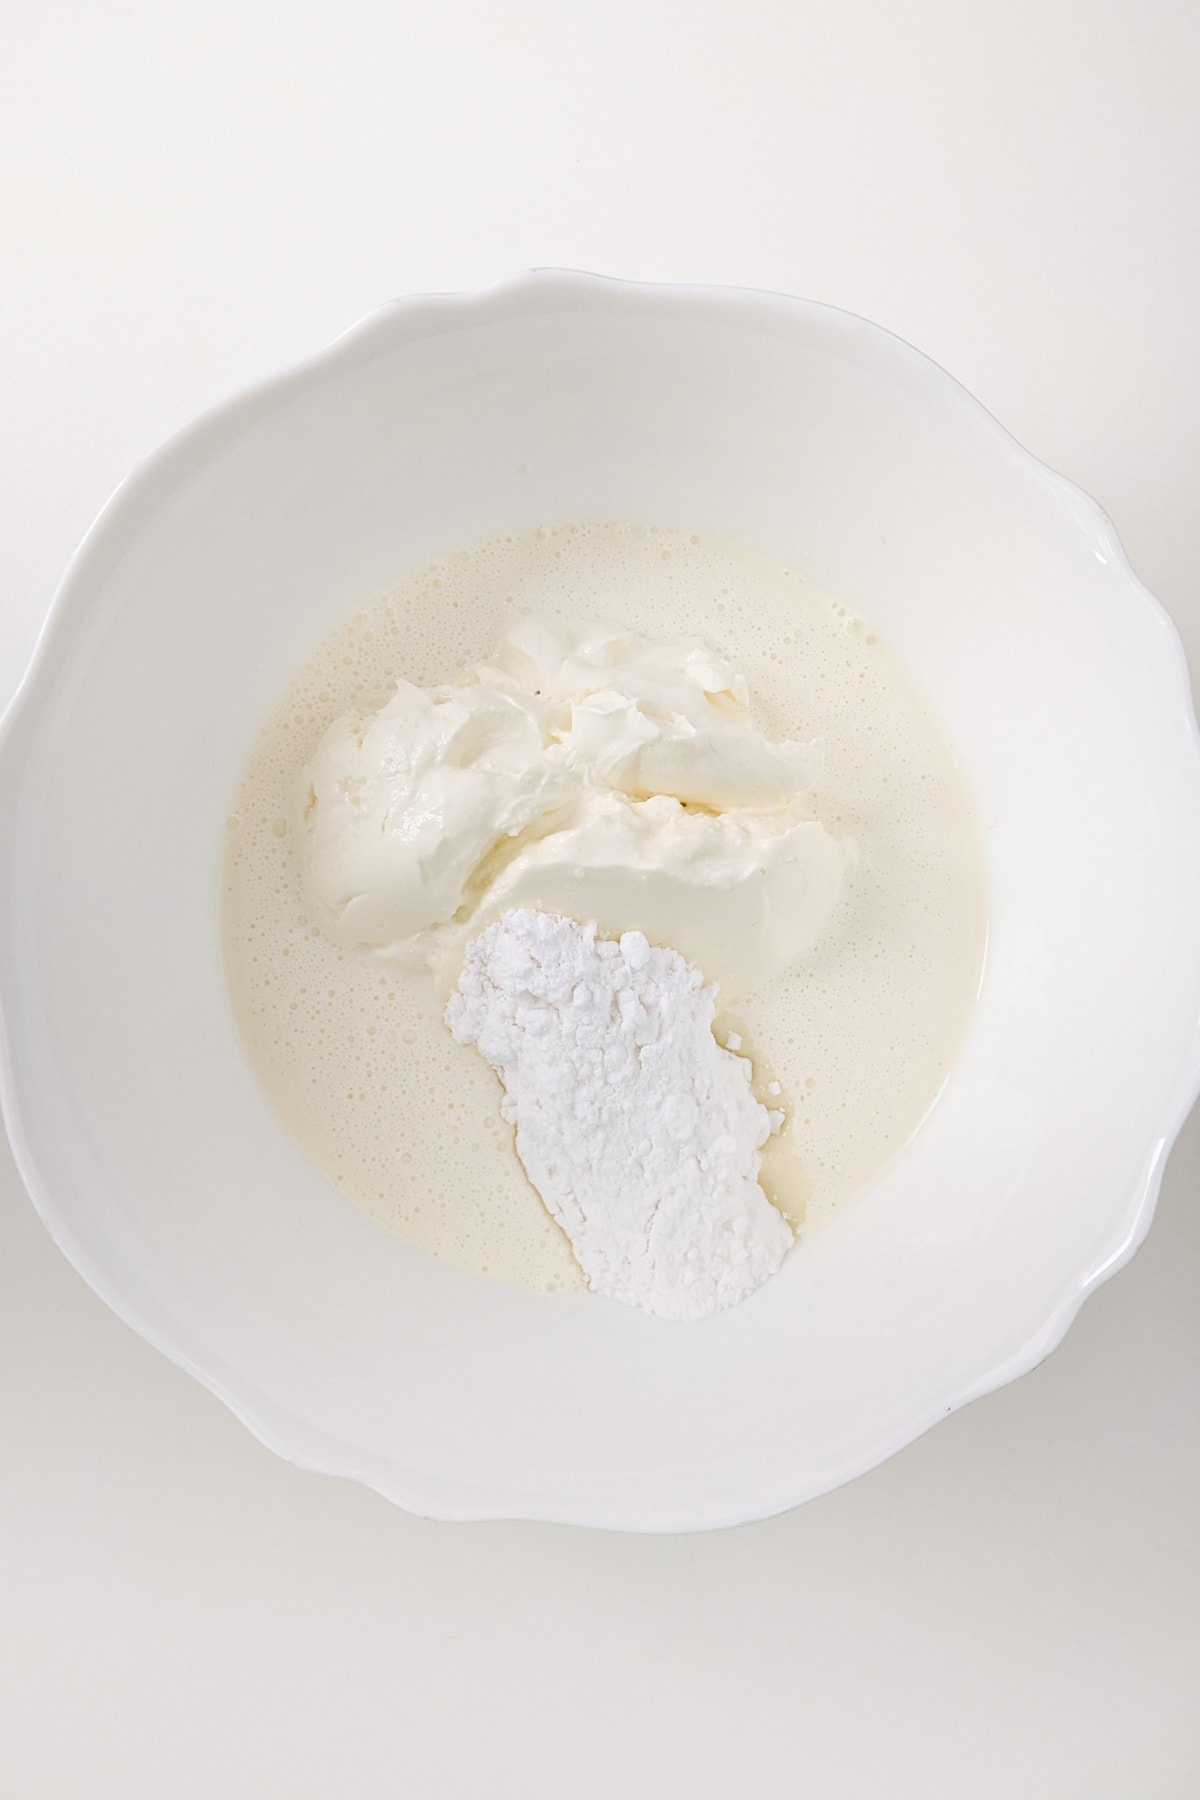 White plate with yogurt, cream cheese and flour.